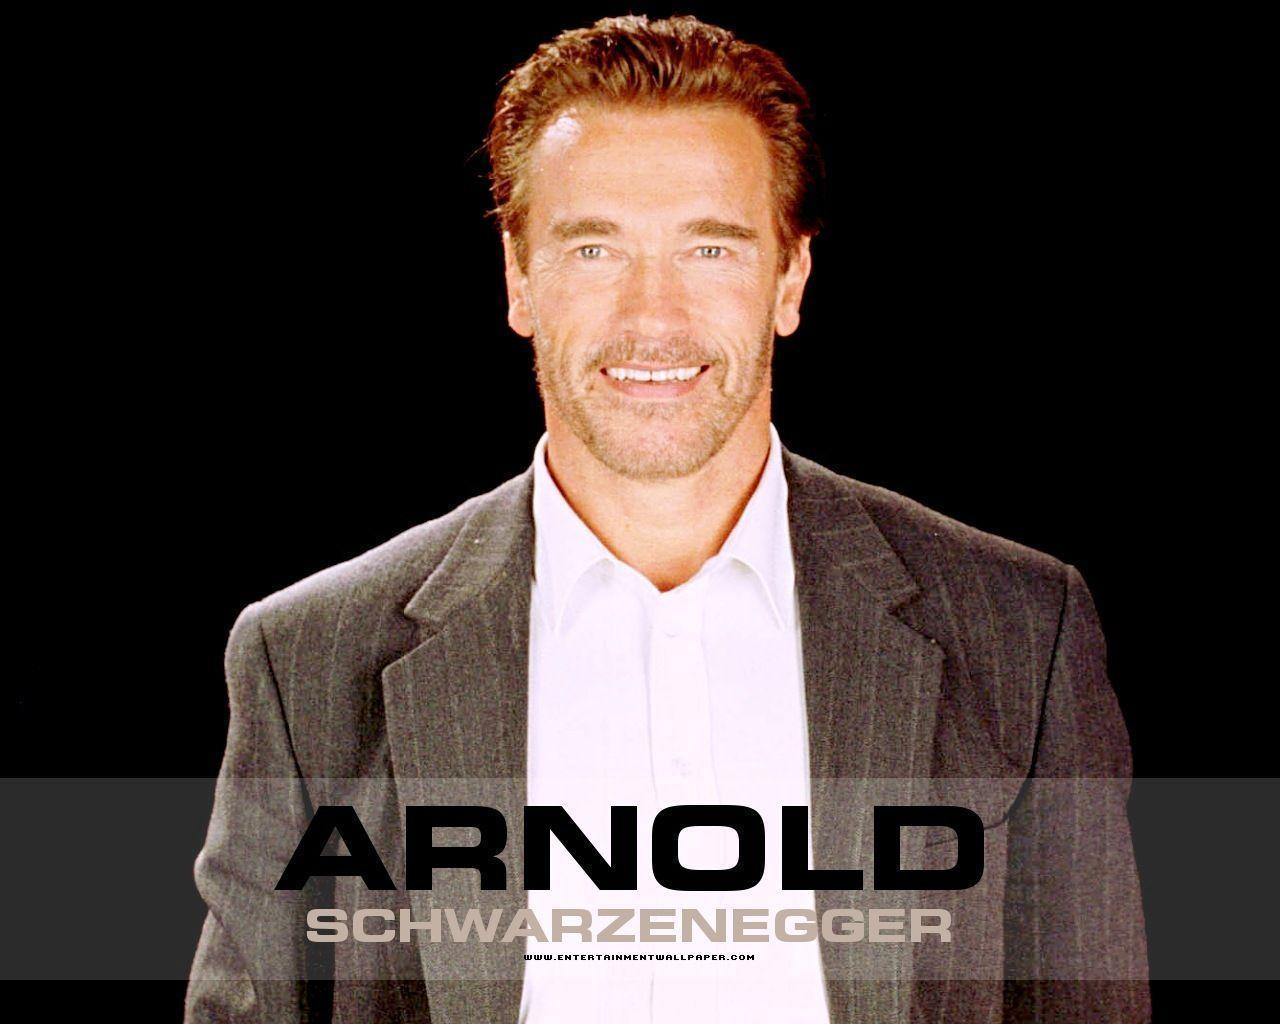 Wallpaper of Arnold Schwarzenegger